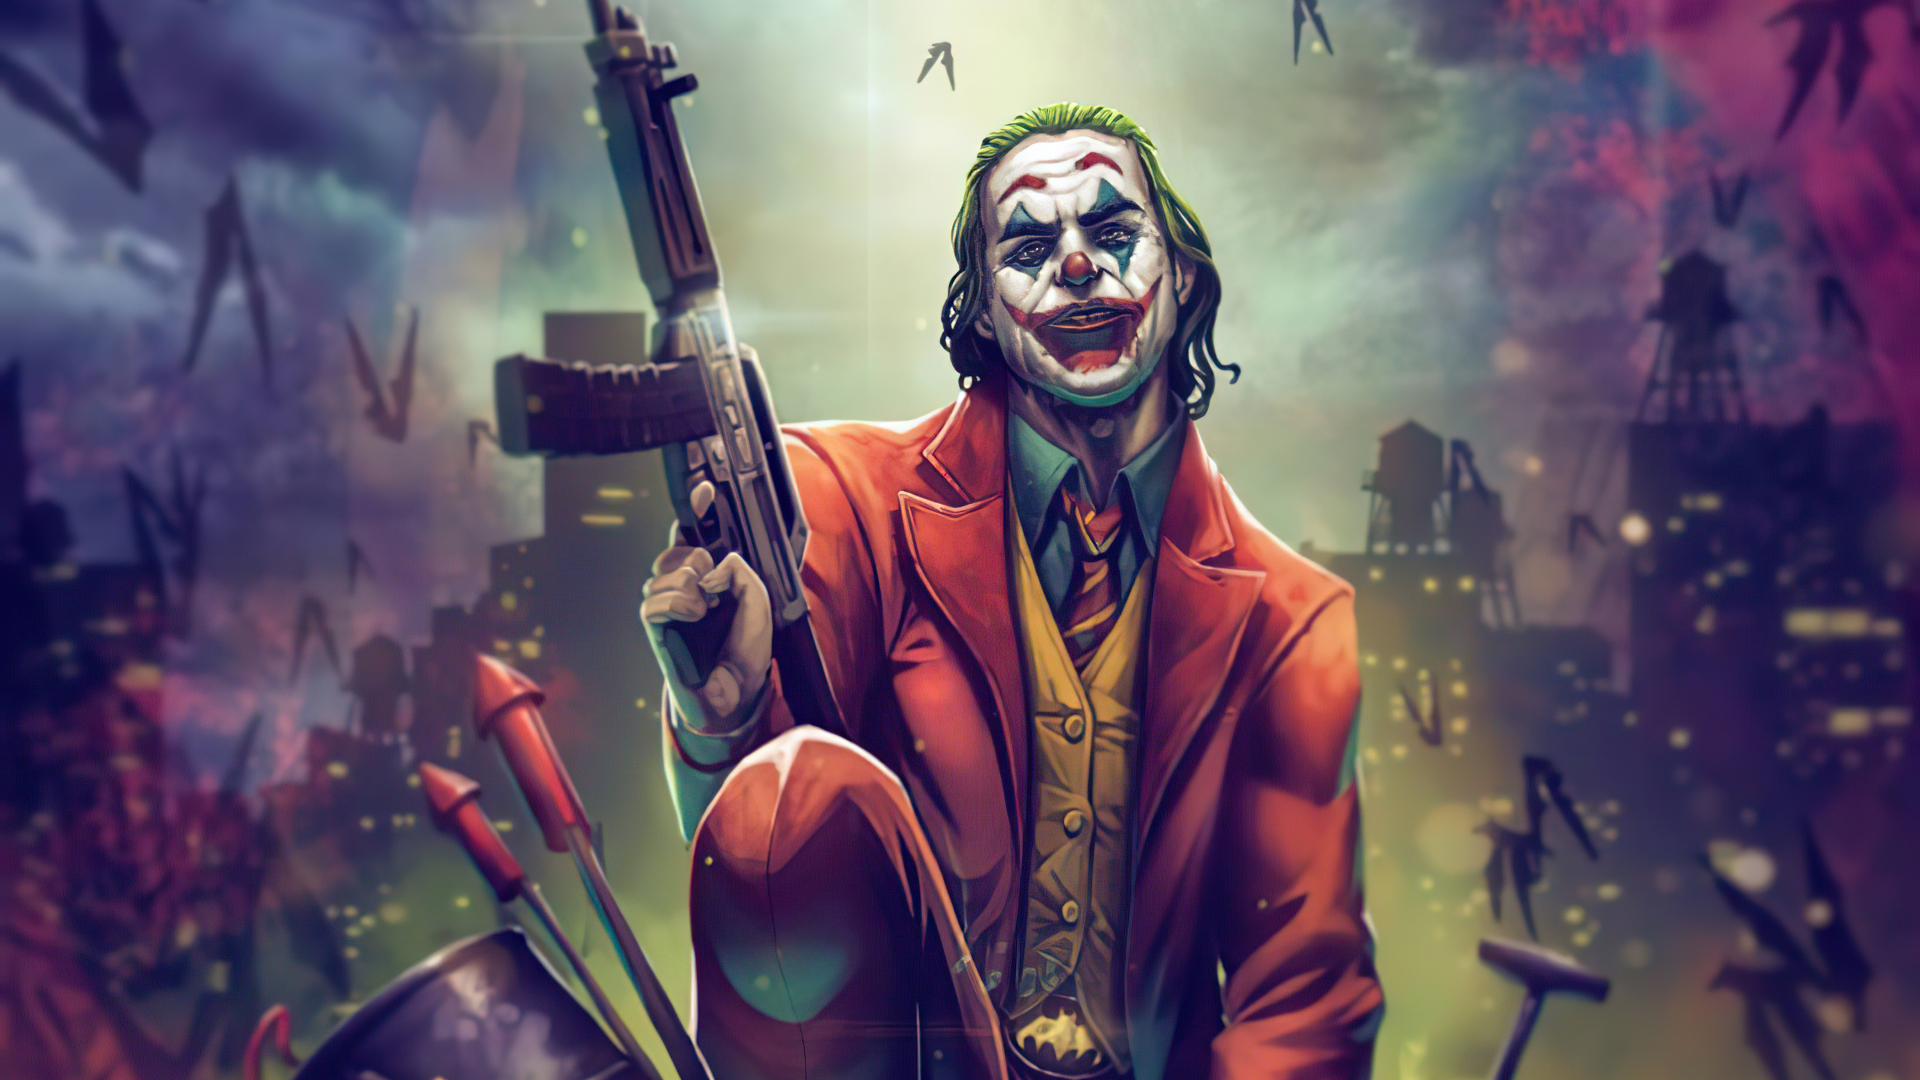 ArtStation  Fan Art Ko Kyaw  PIXEL BRUSH ARTSTUDIO   Batman joker  wallpaper Joker pics Joker poster